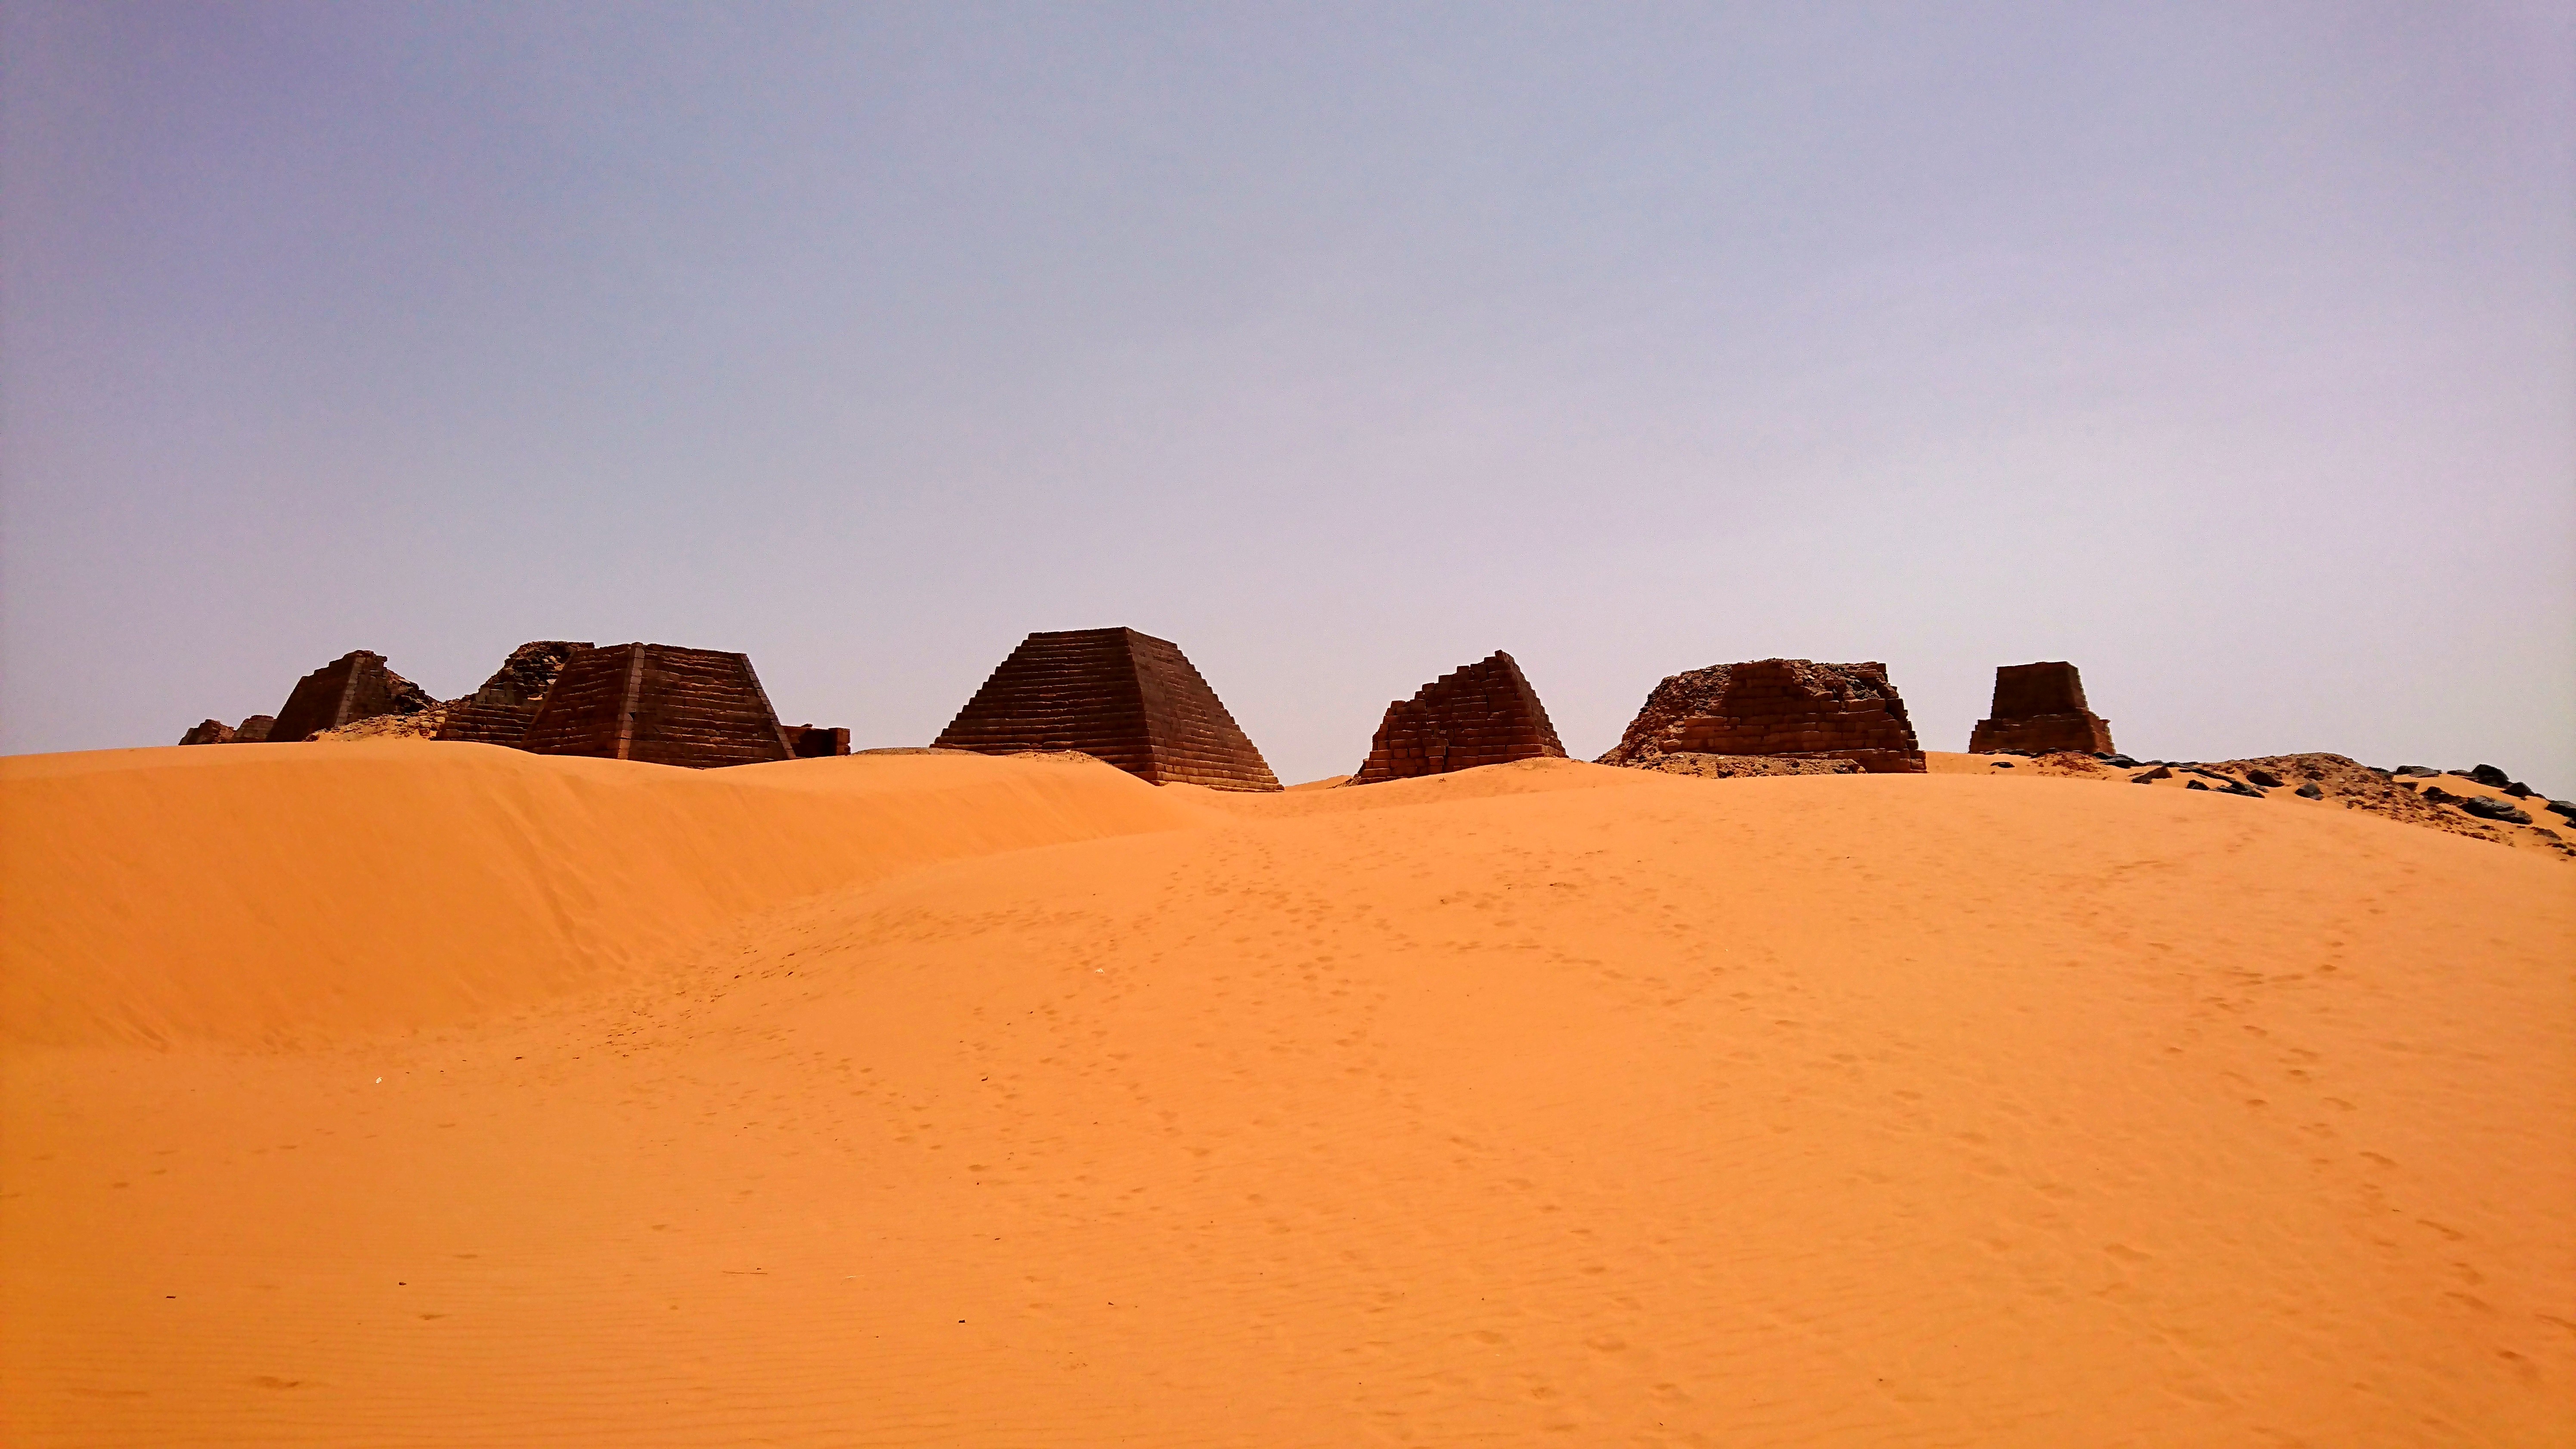 Meroe Pyramids, Sudan